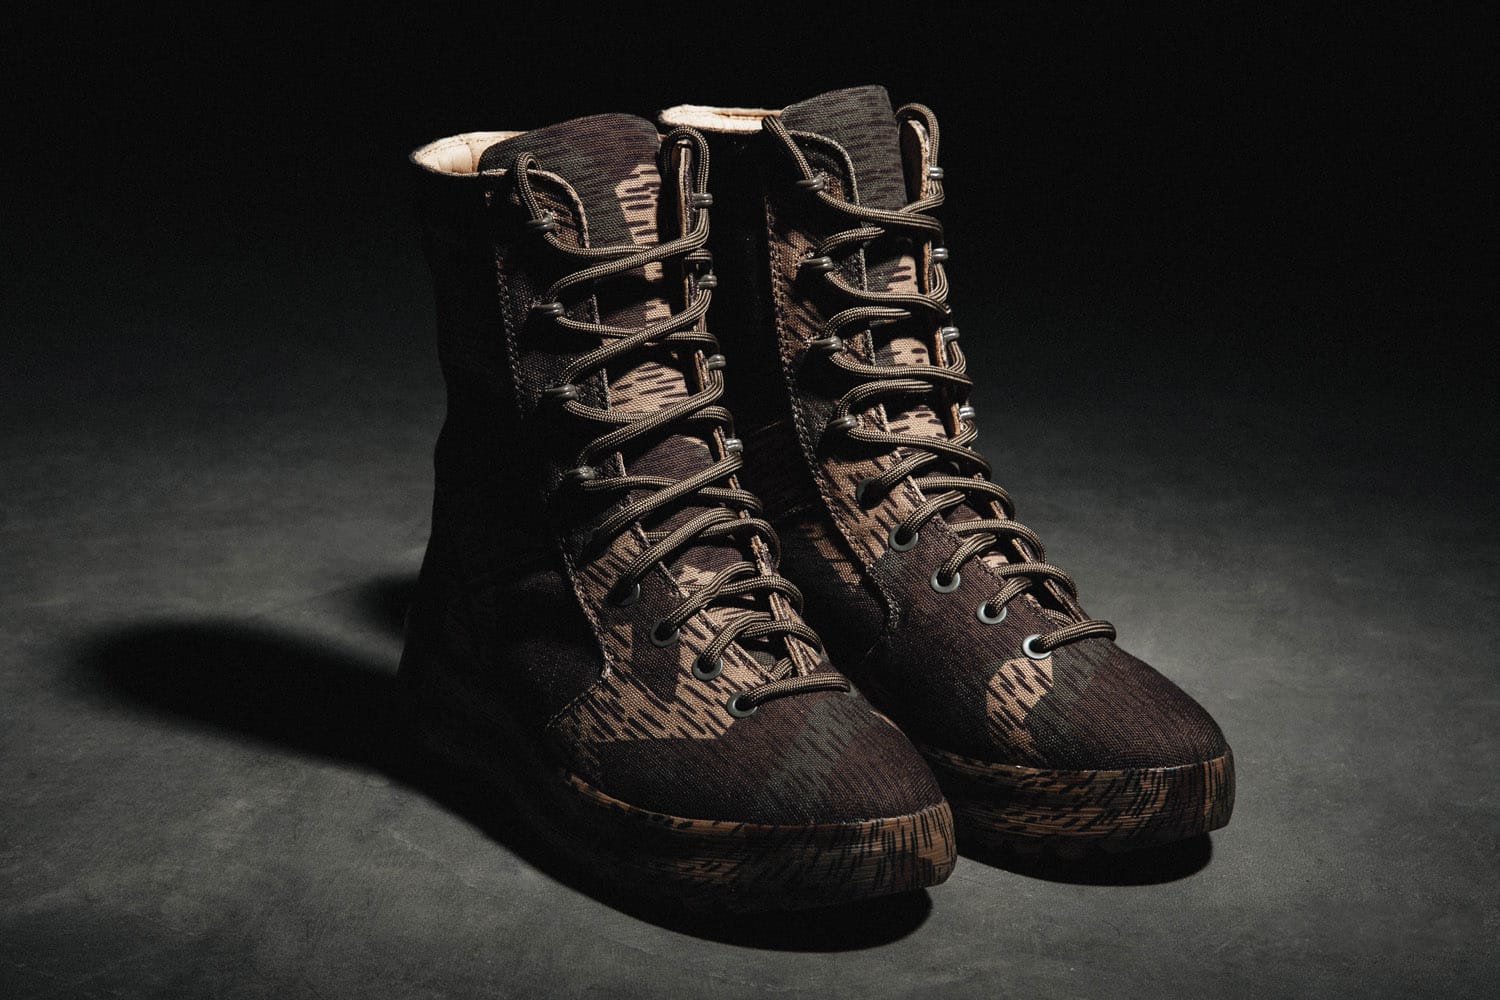 yeezy season 6 military boots